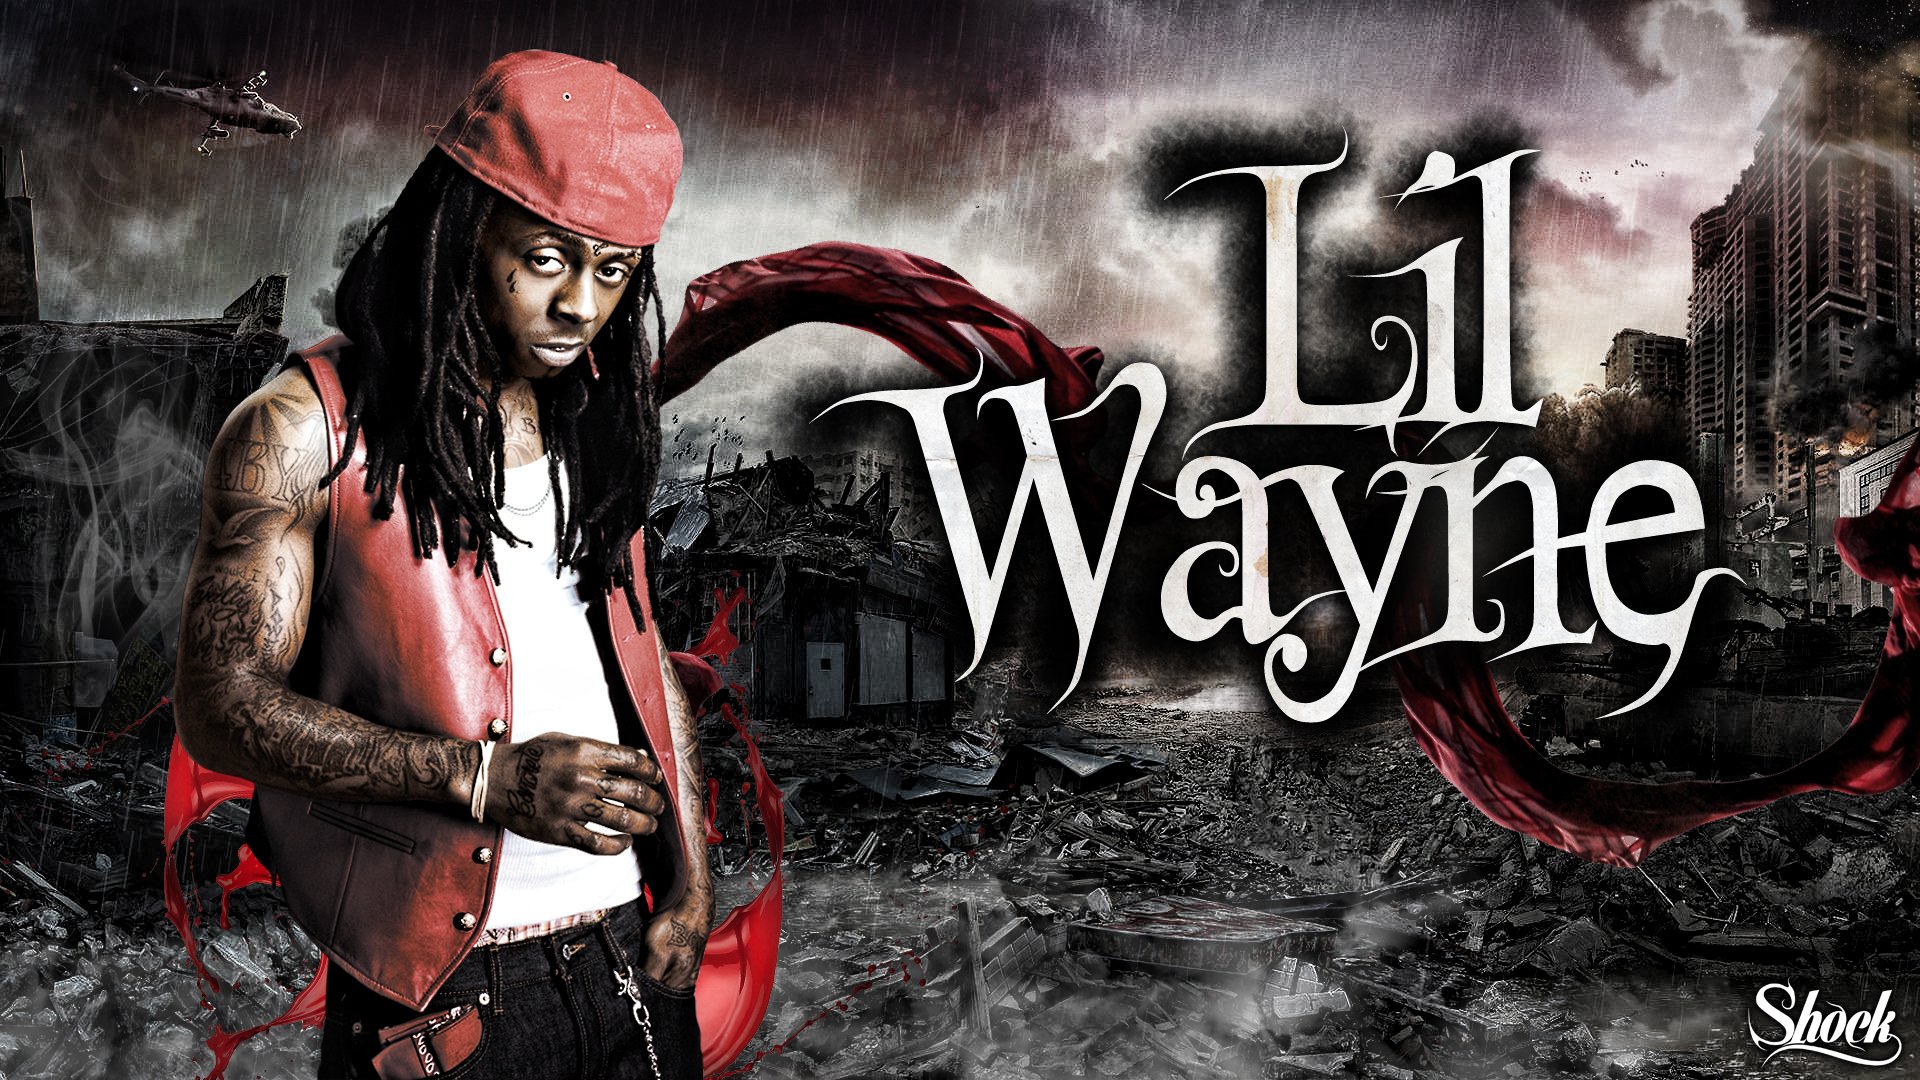 Lil Wayne HD Rap Wallpapers